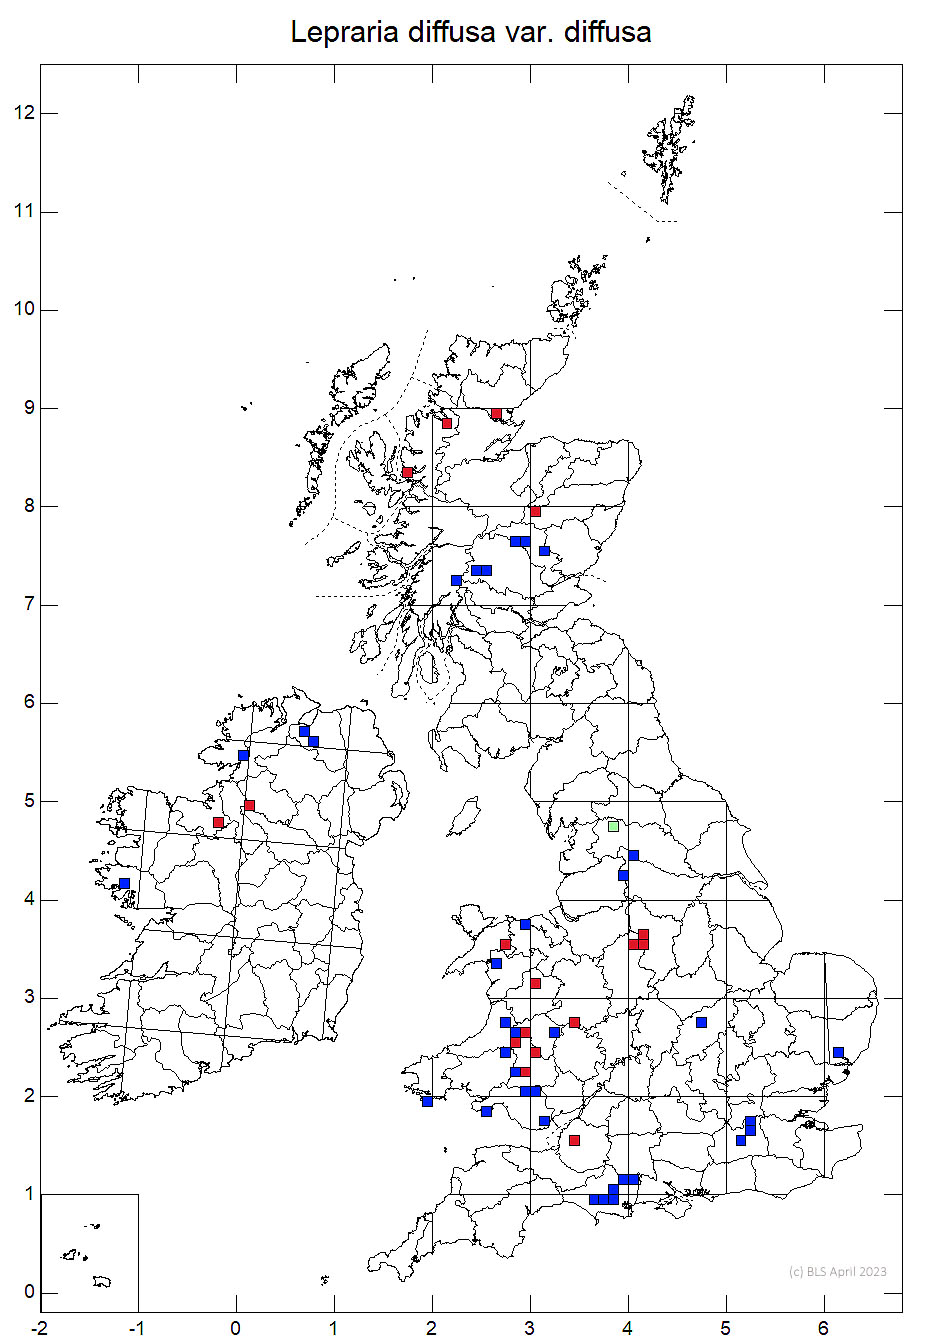 Lepraria diffusa var. diffusa 10km sq distribution map